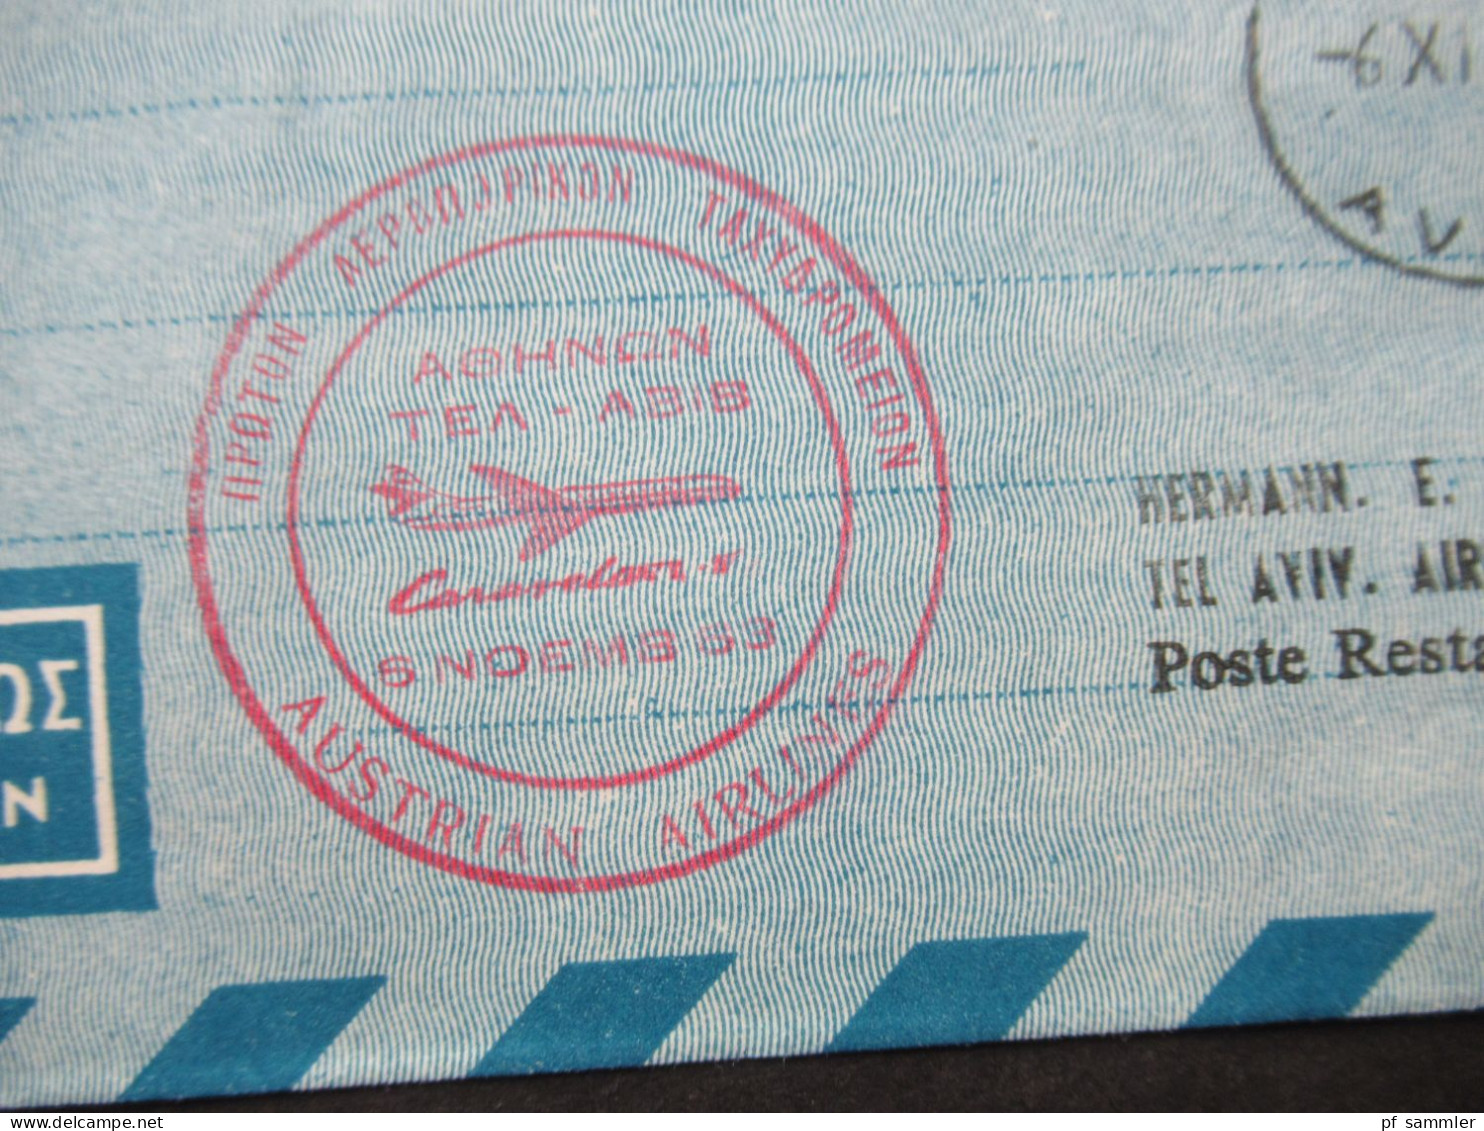 Griechenland 1963 Postes Helleniques Par Avion / Luftpost / Condor Austrian Airlines - Tel Aviv Israel Poste Restante - Cartas & Documentos